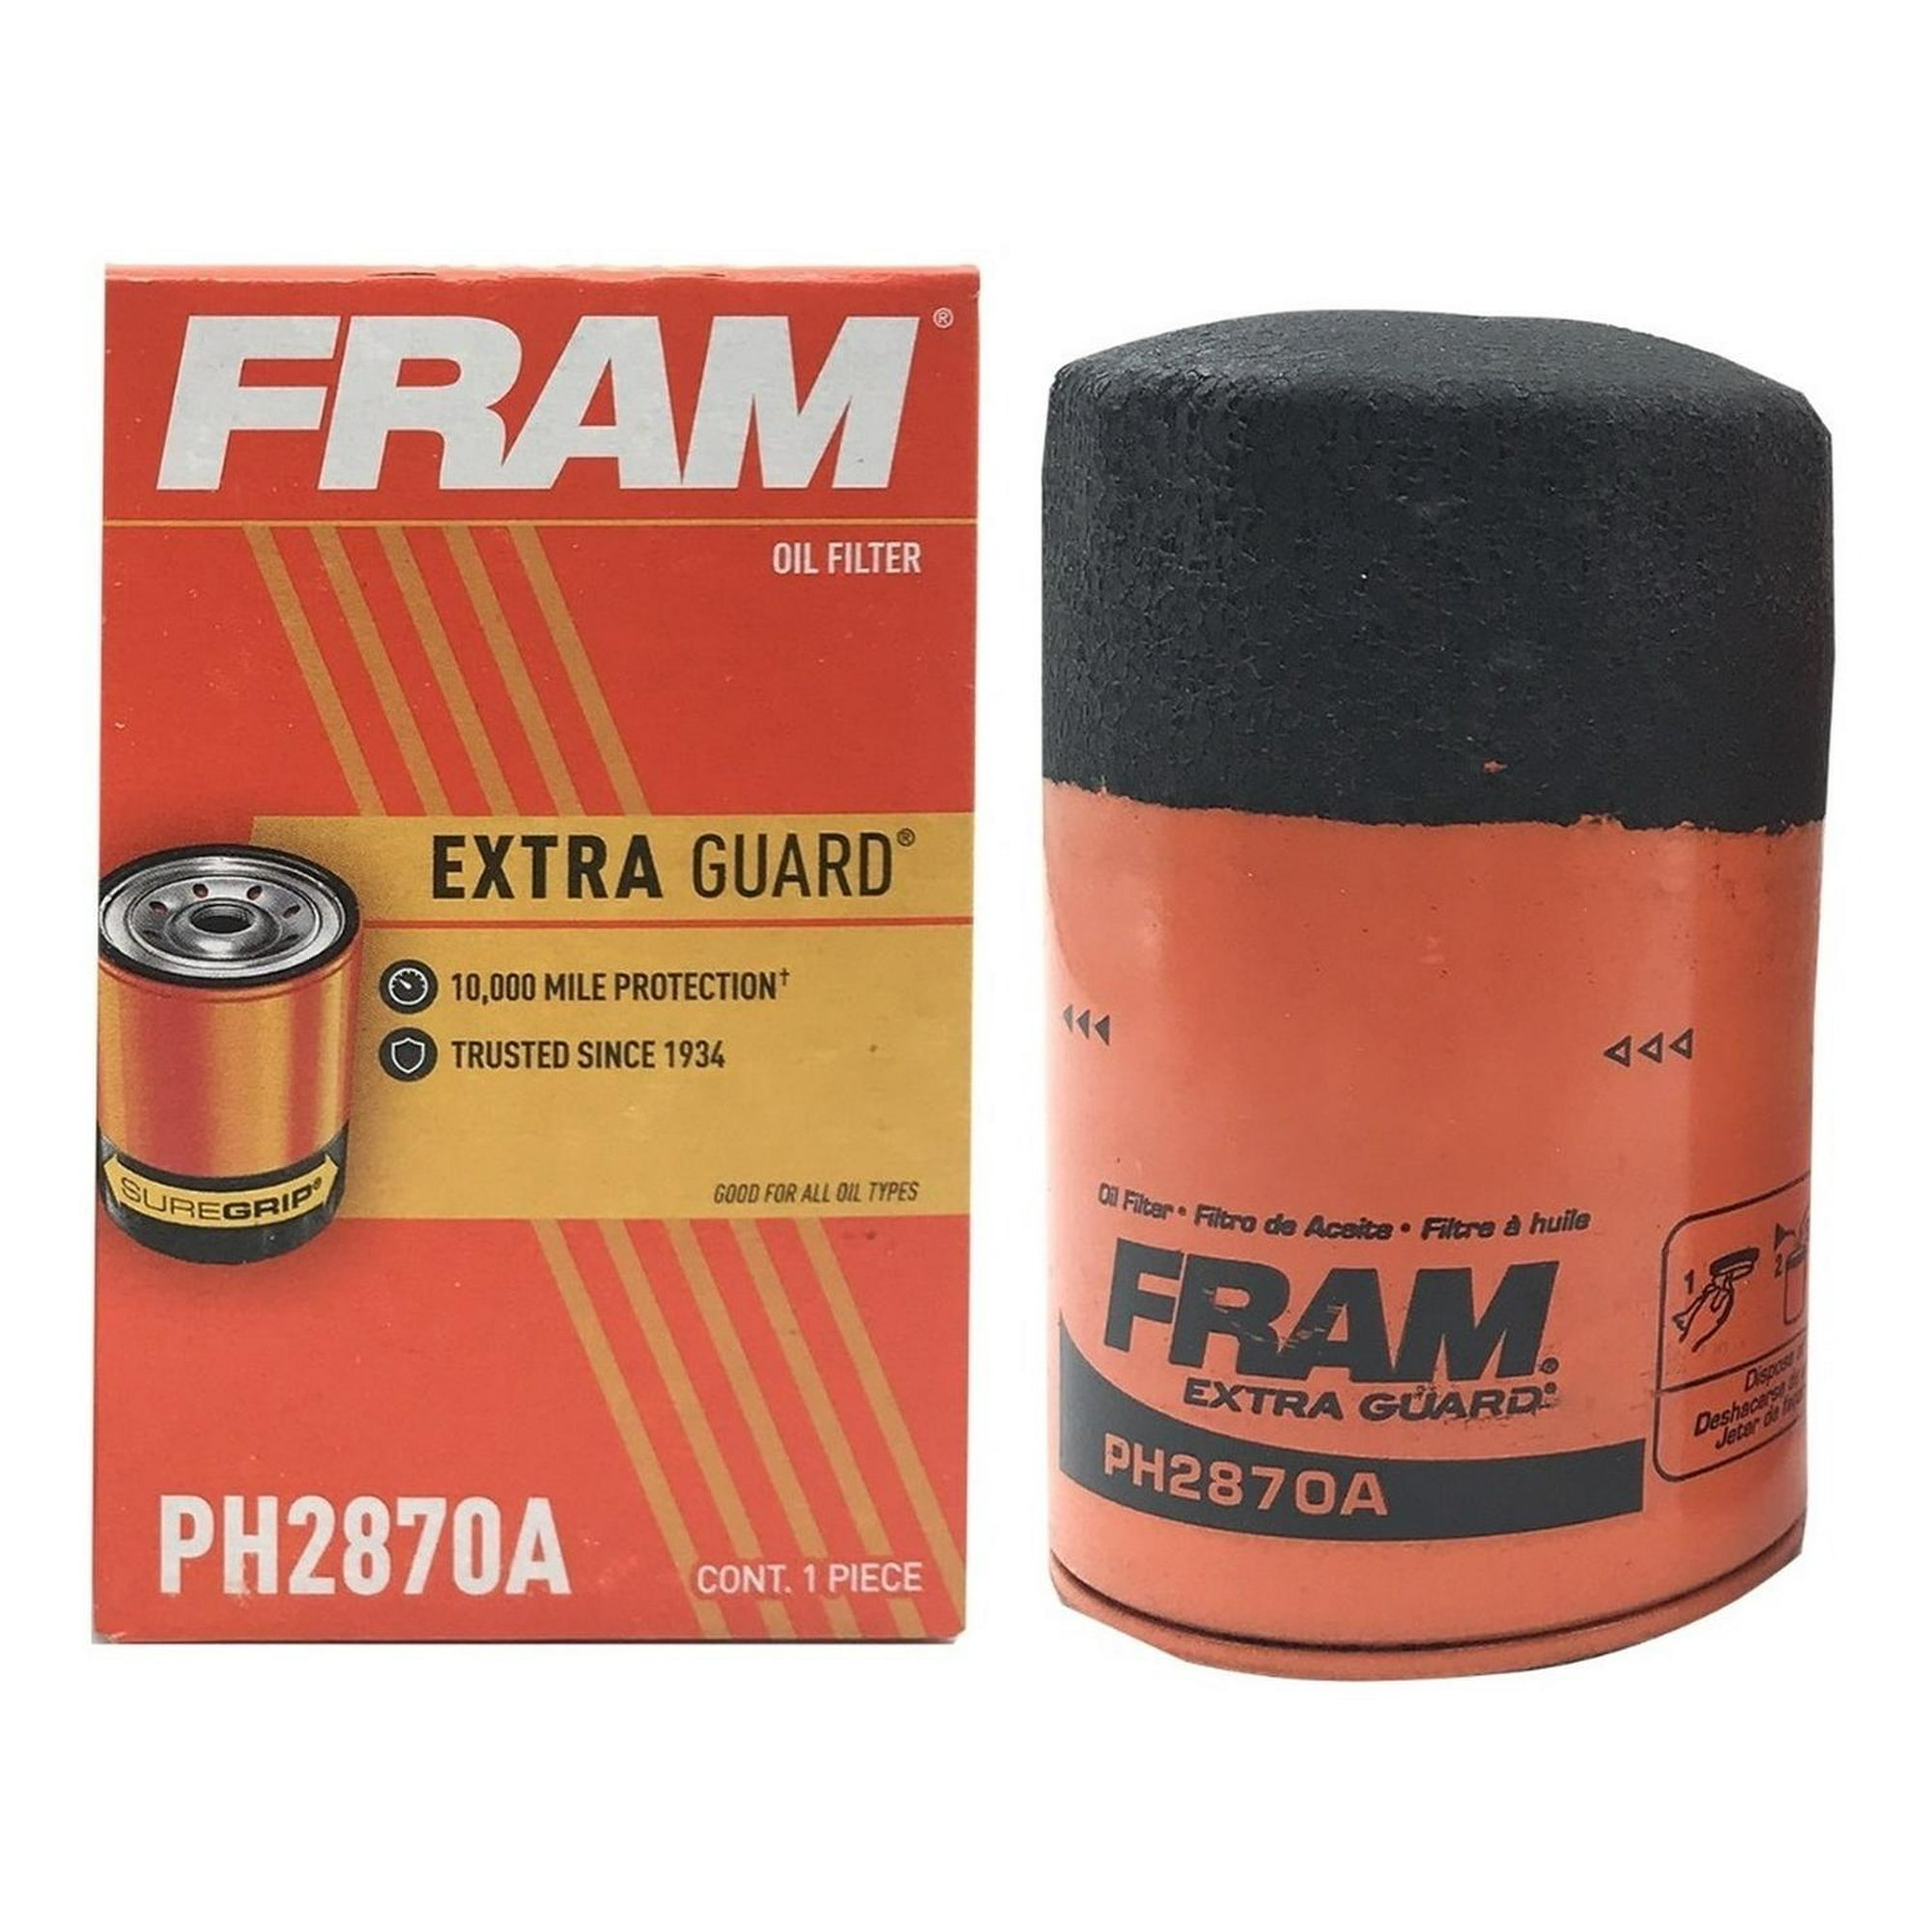 Filtro de Aceite Ph2870a FRAM Extra Guard